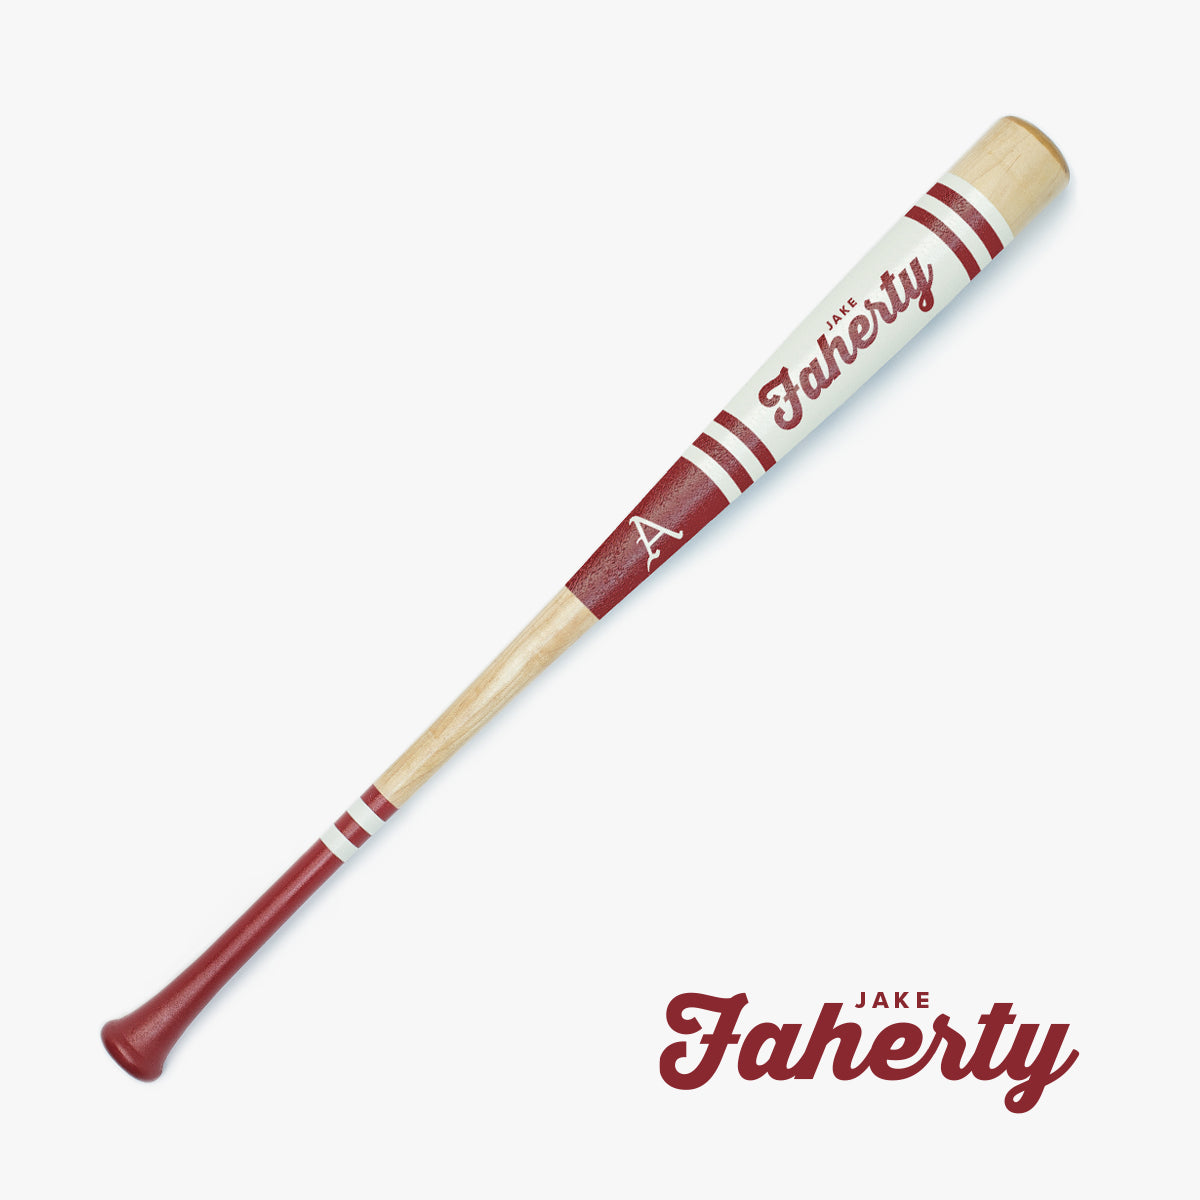 Jake Faherty University of Arkansas Baseball